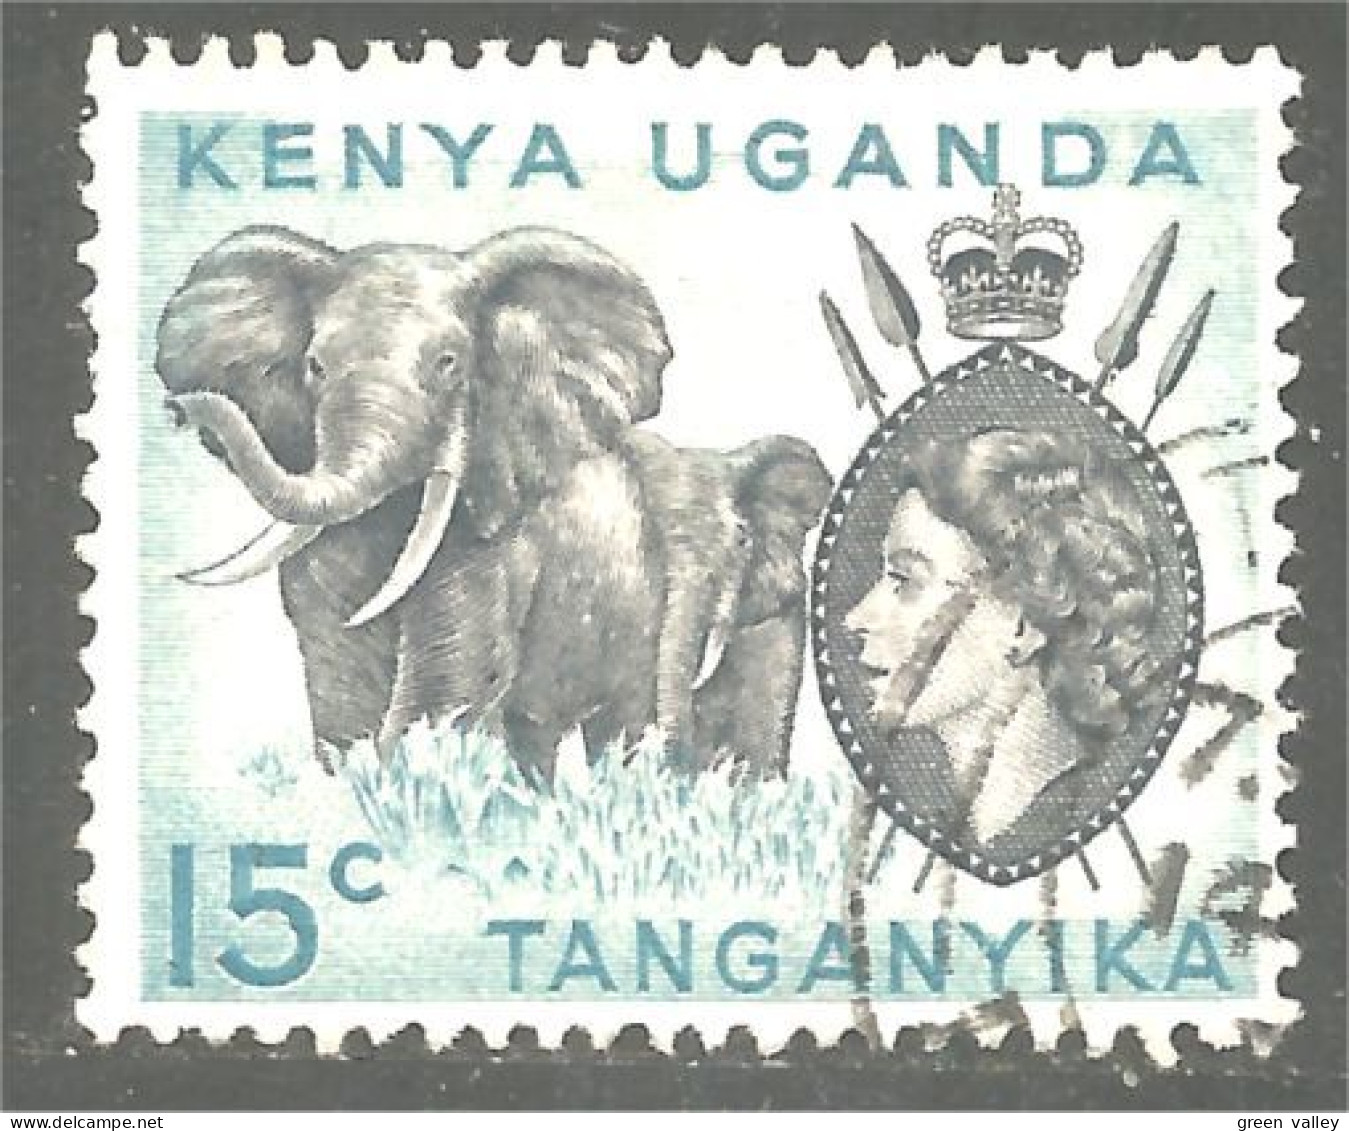 554 Kenya Uganda Tanganyika  Elephant Elefante Norsu Elefant Olifant (KUT-71) - Elefanten